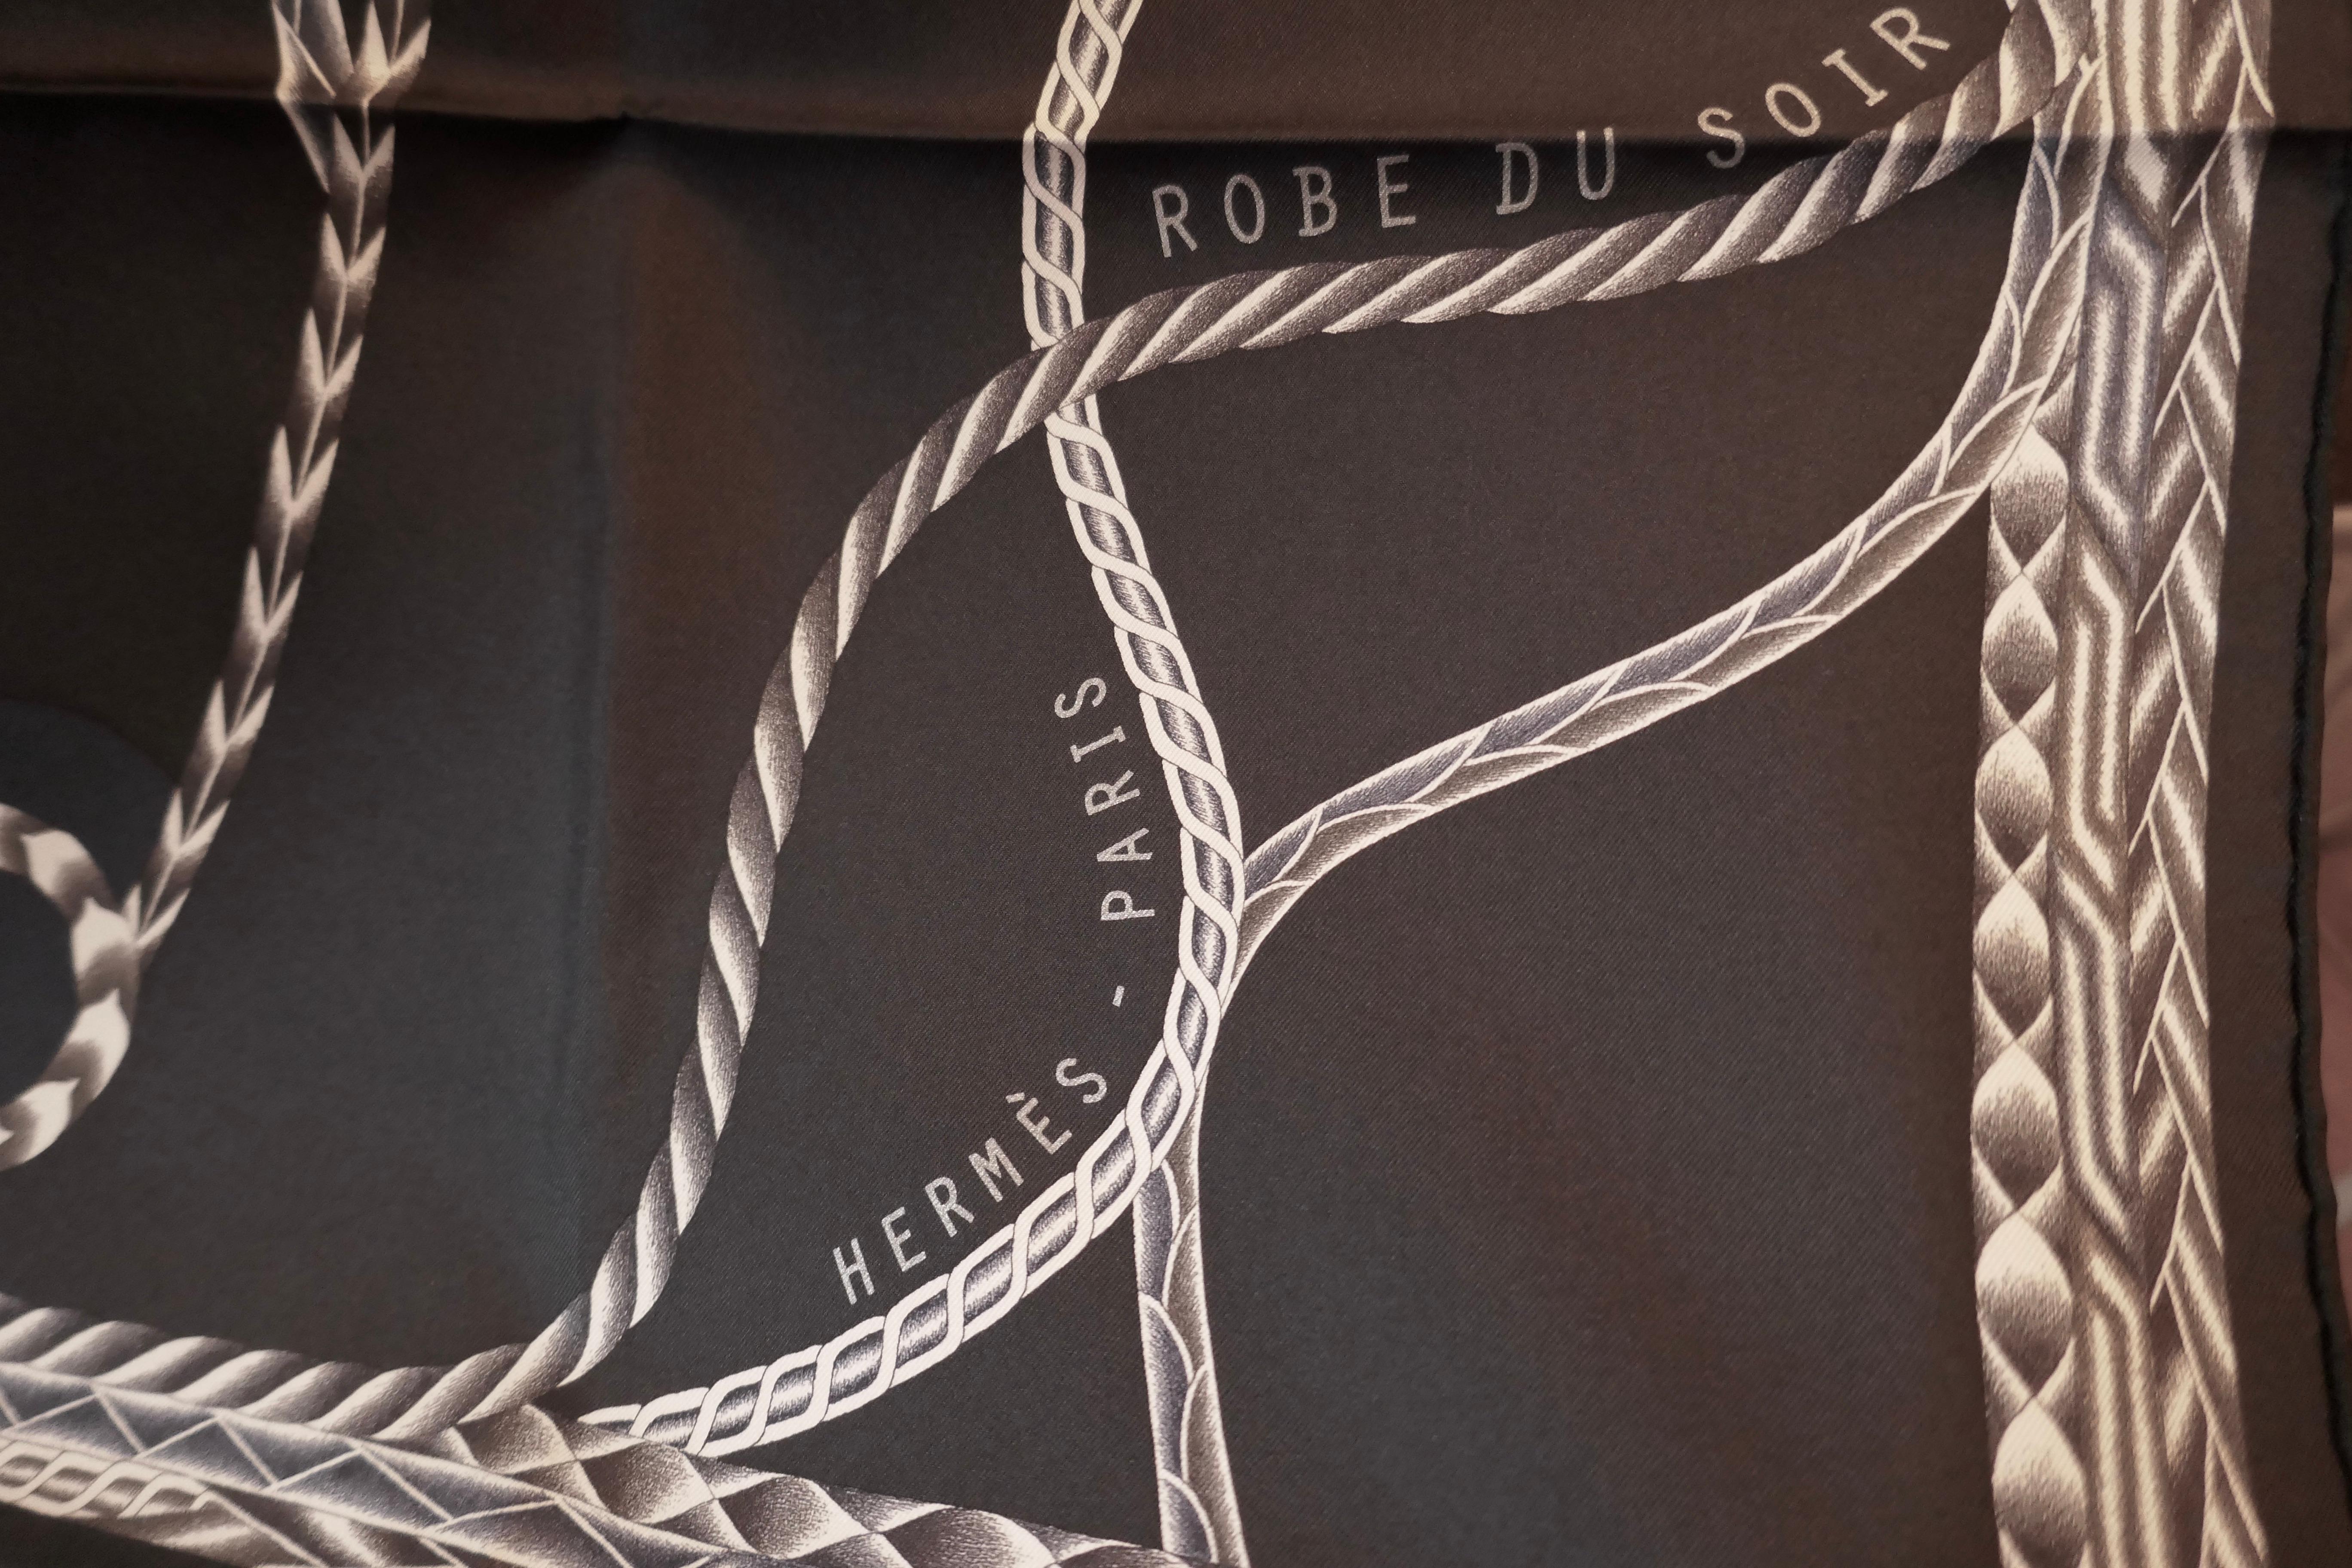 Black Beautiful Rare 2018 Hermes Silk Scarf “ Robe du Soir” by Florence Manklin  